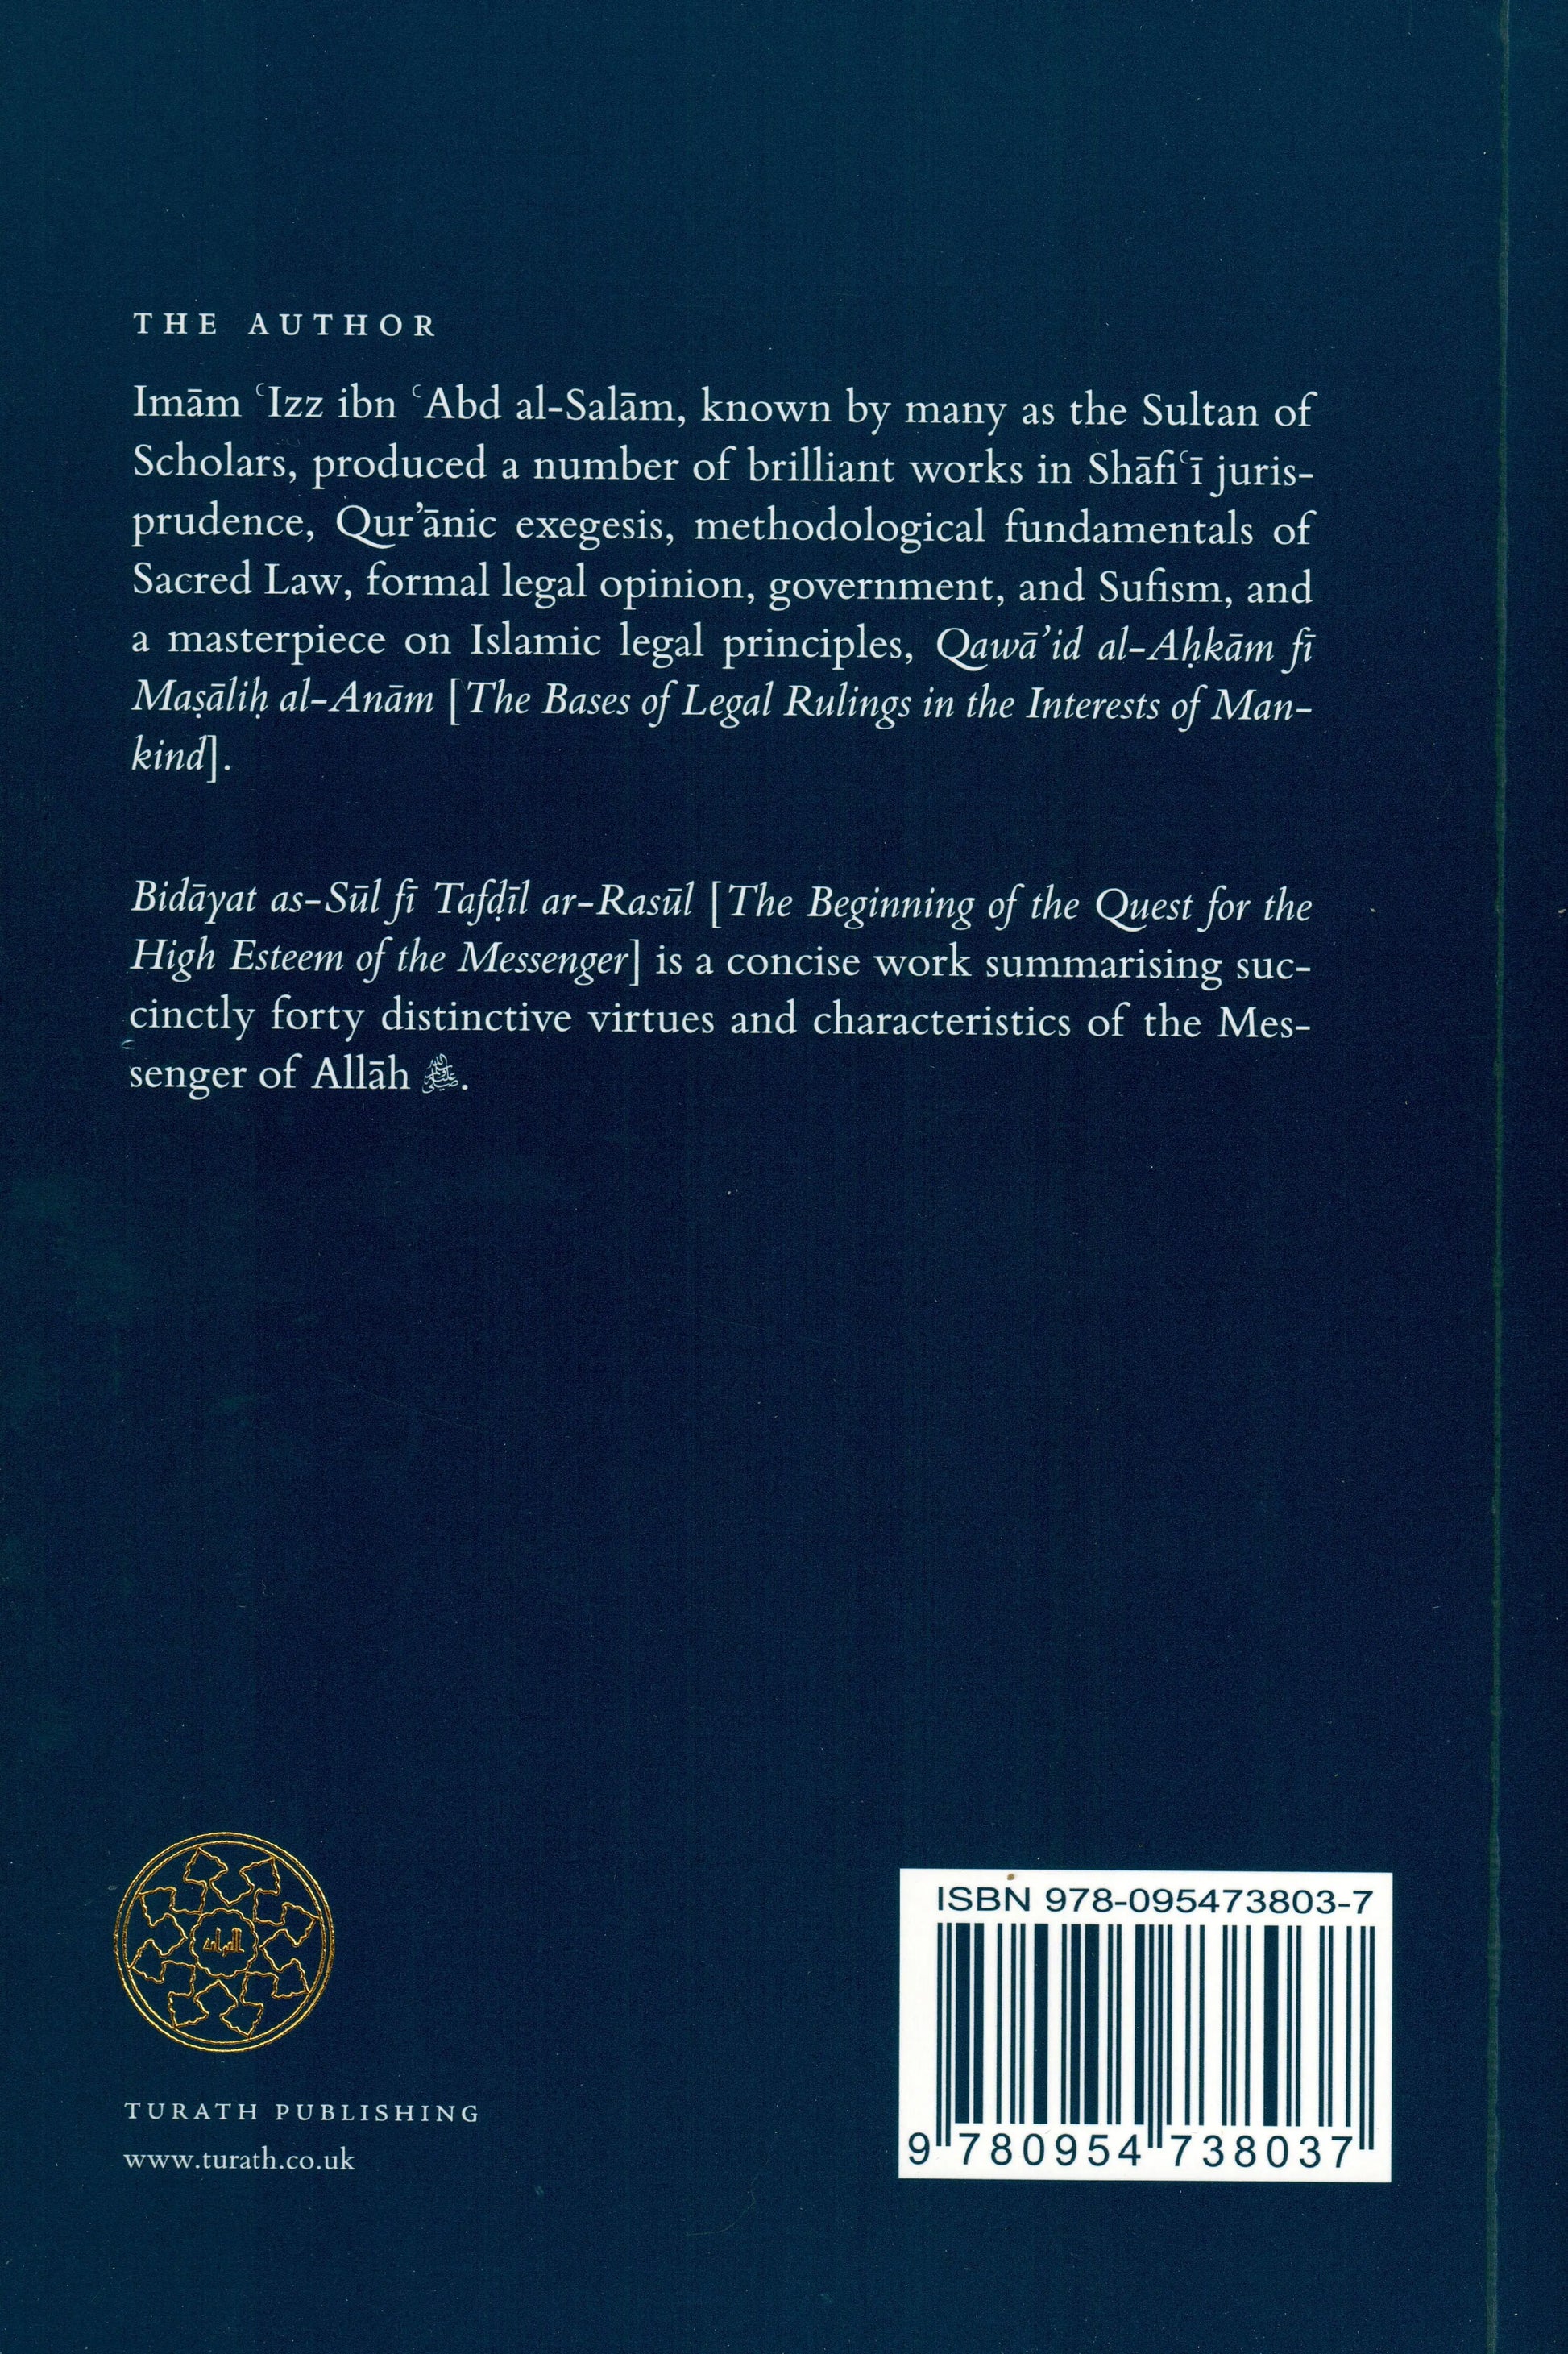 Bidayat as-Sul Fi Tafdil ar-Rasul: The Beginning Of The Quest Of The High Esteem Of The Messenger Turath Publishing